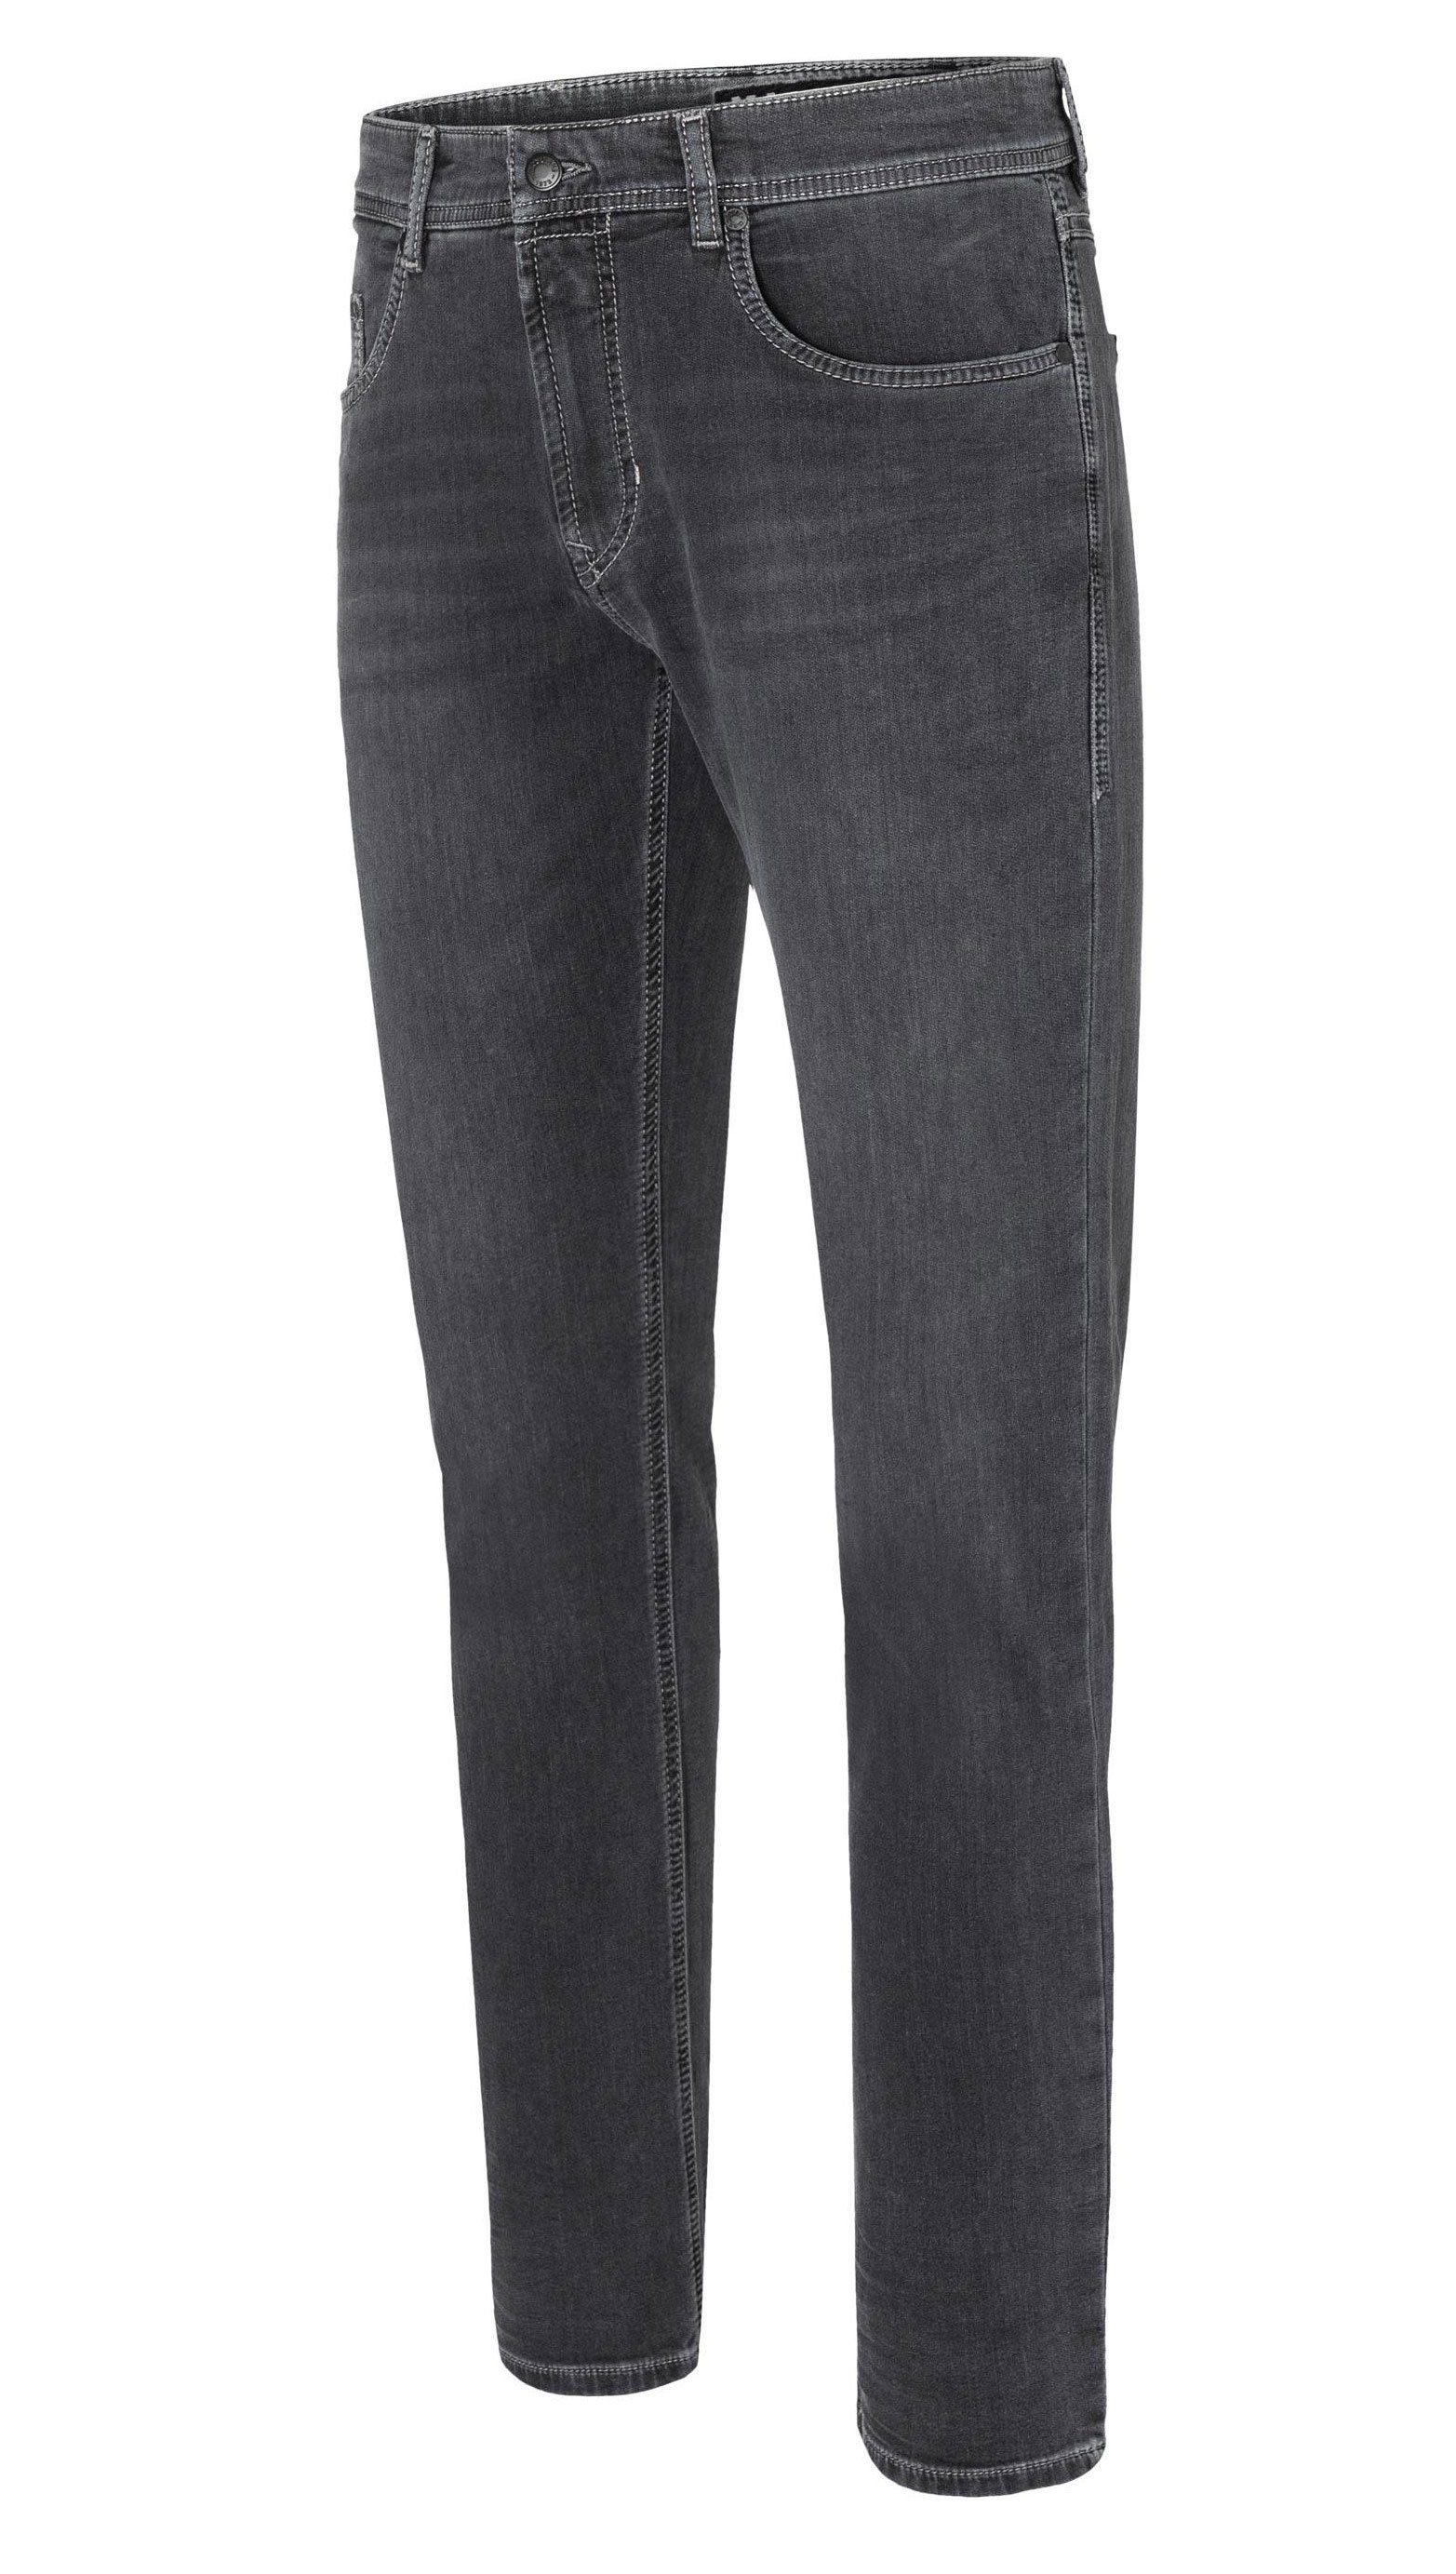 Grey H830 5-Pocket-Jeans Jog'n Sweat Light Jeans Used 0994L Denim MAC